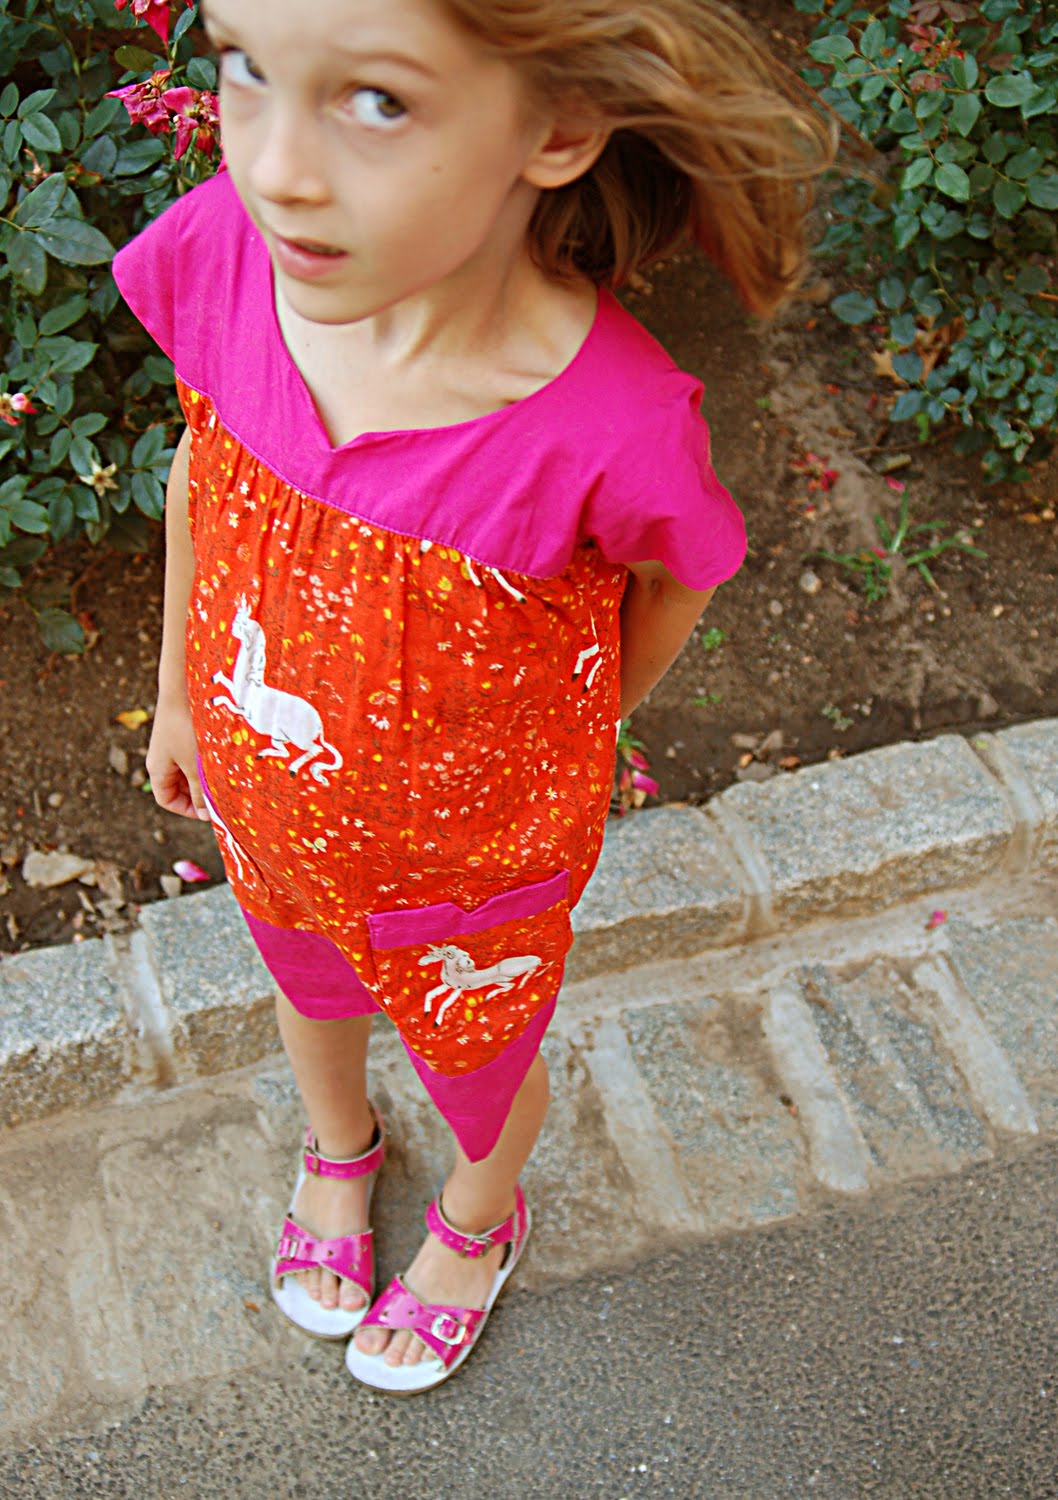 little girl wearing sandals